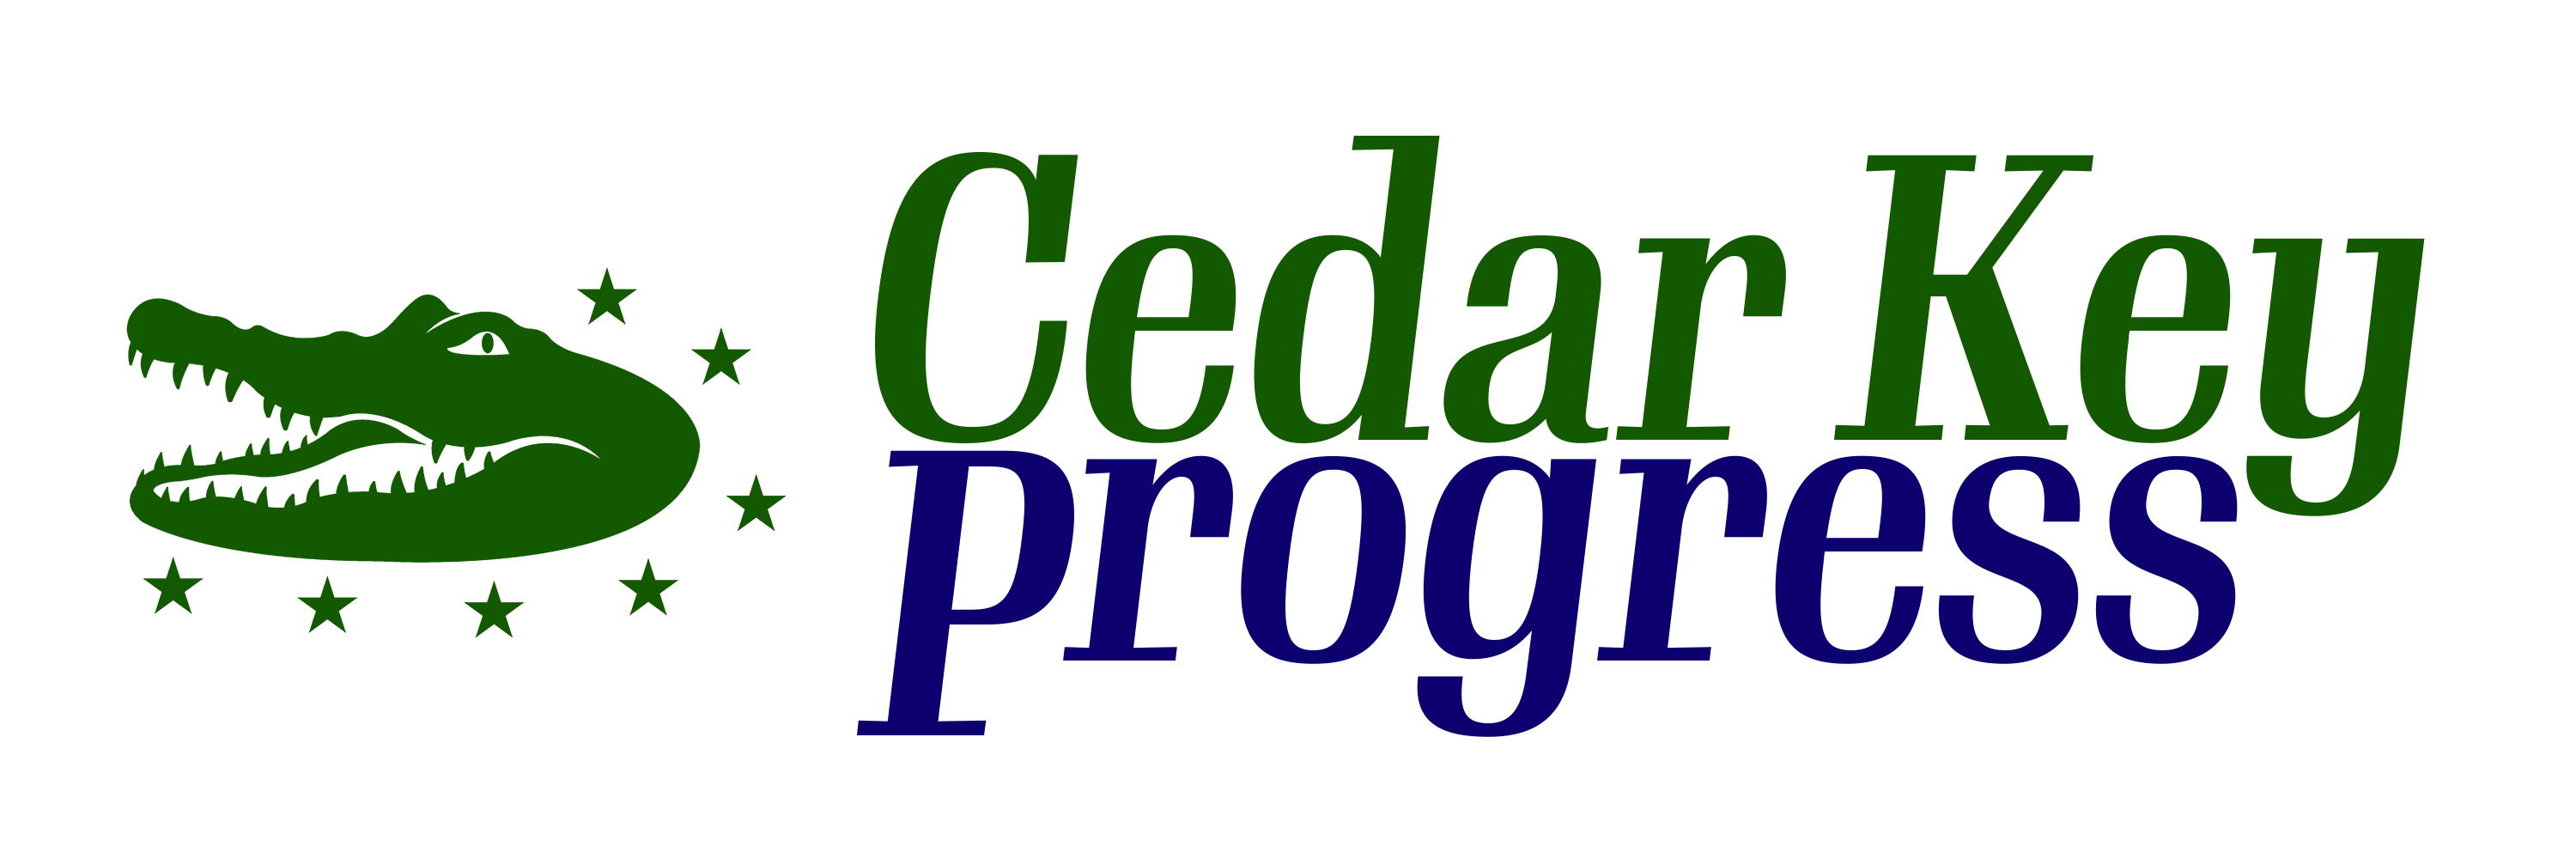 Cedar Key Progress